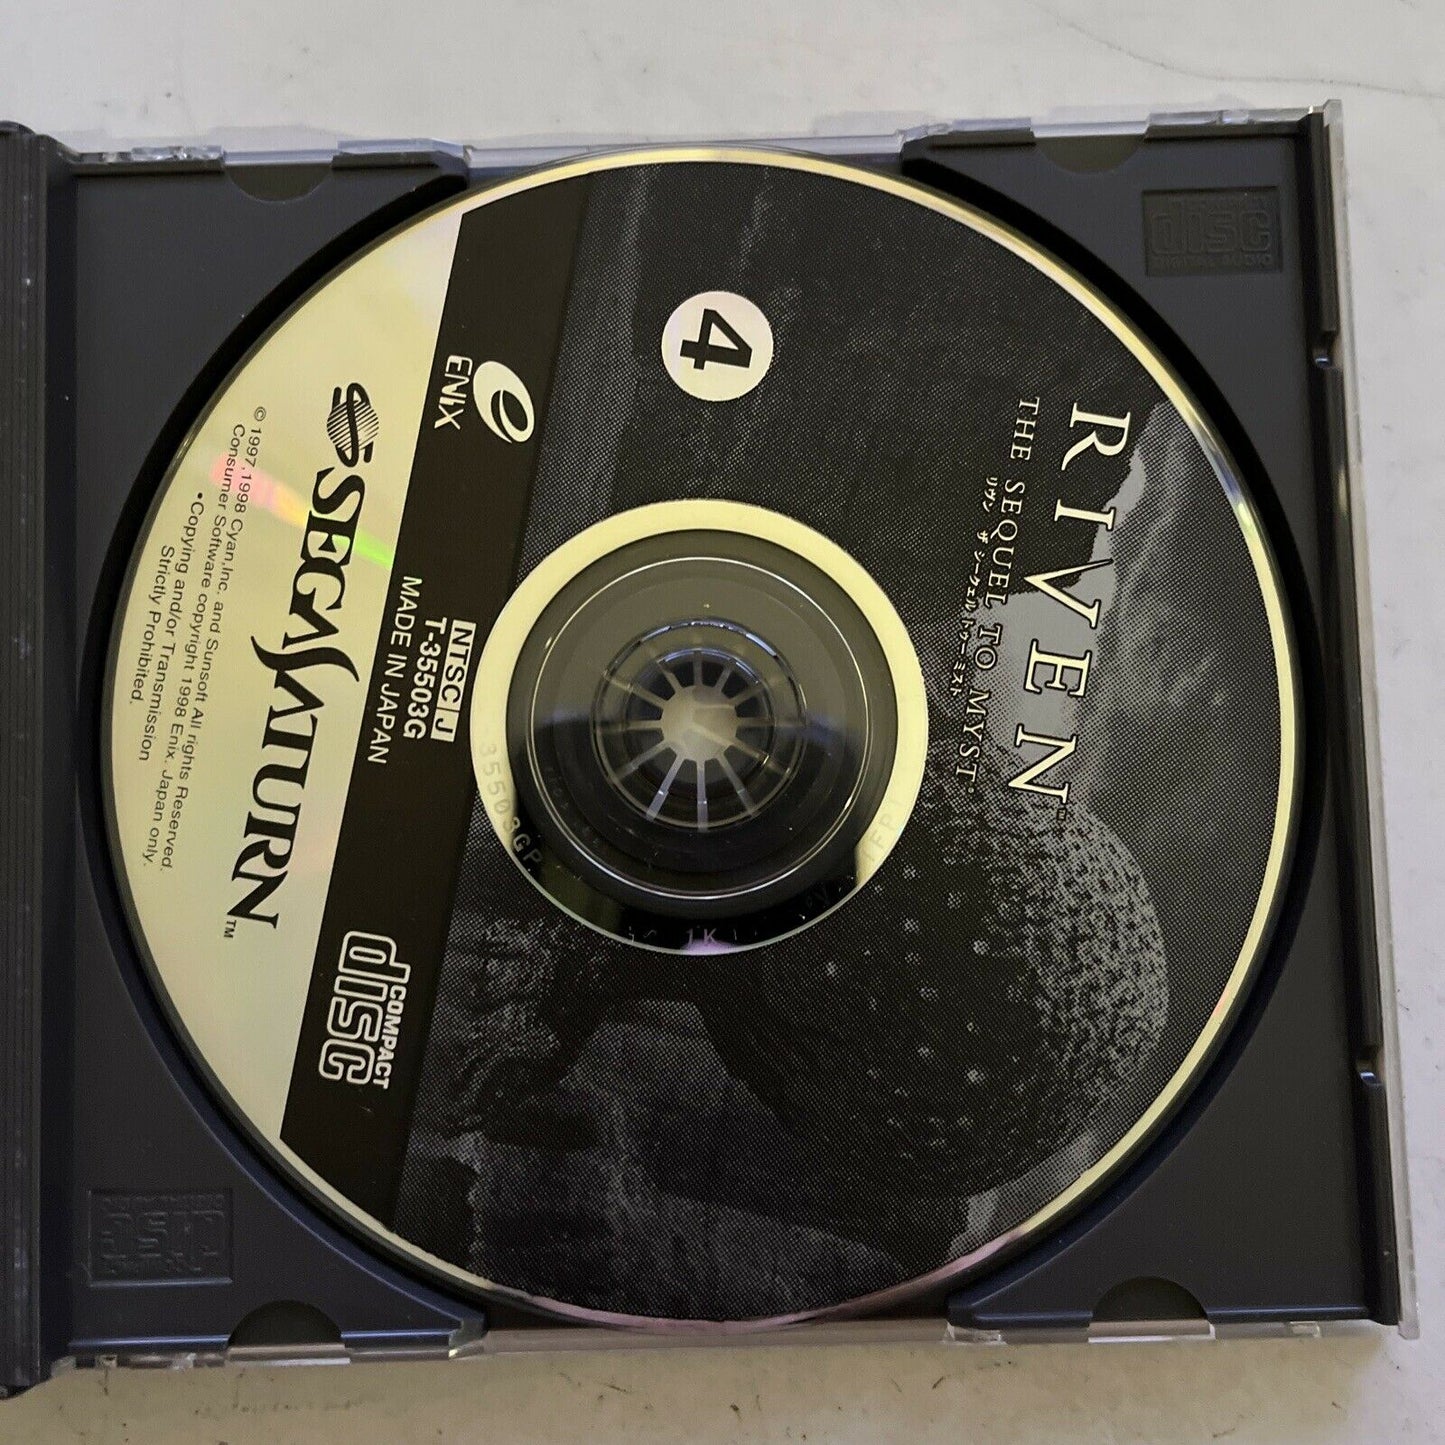 Riven: The Sequel to Myst - Sega Saturn NTSC-J JAPAN Game